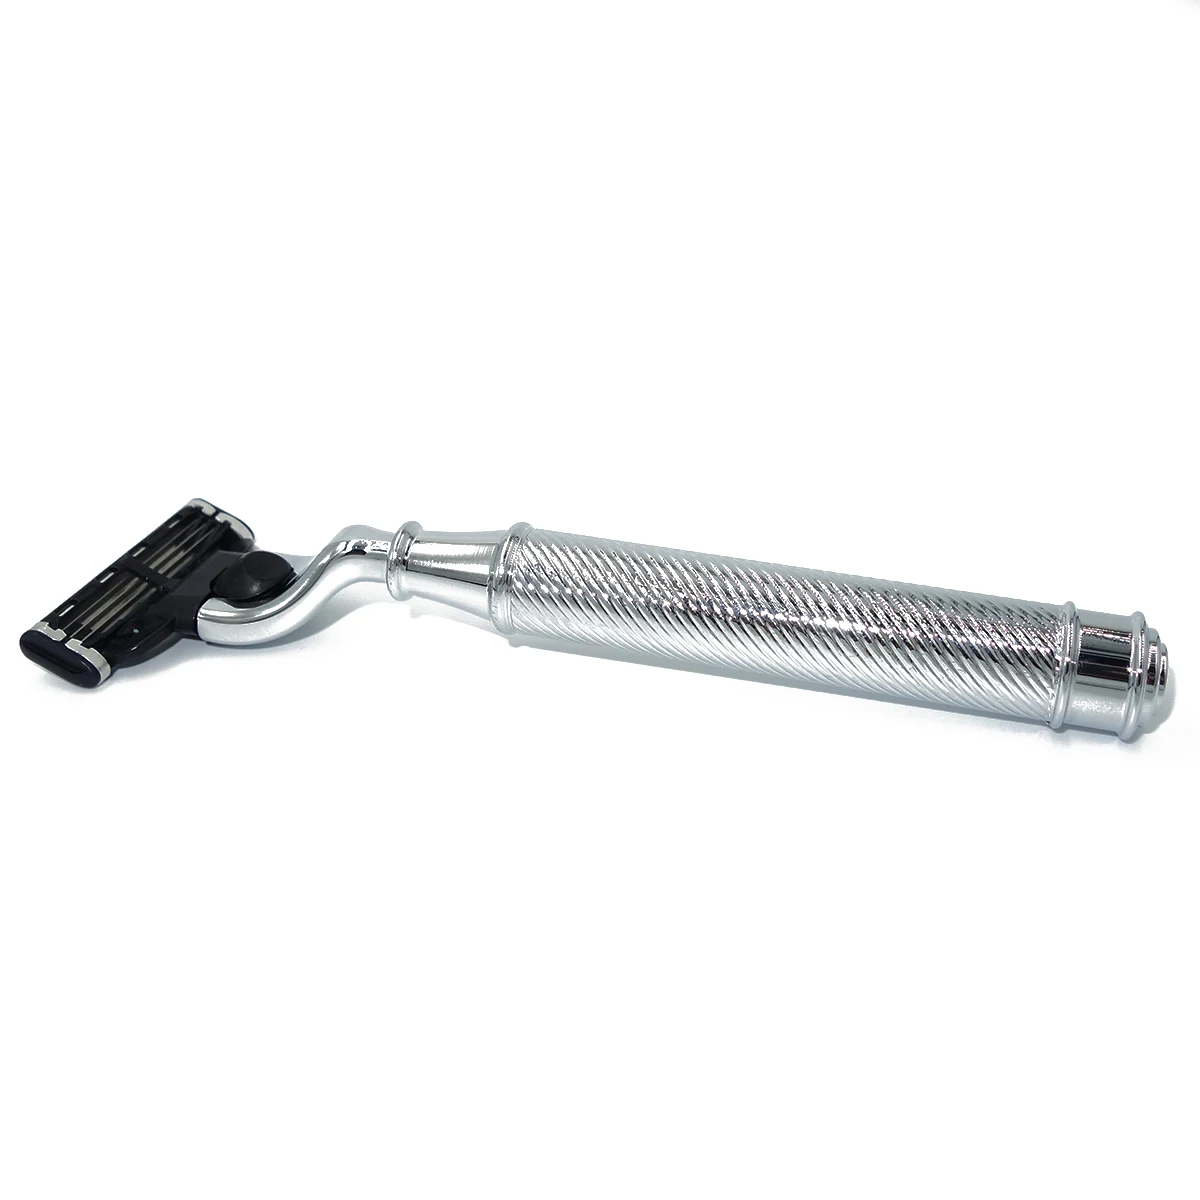 3 lâmina adaptador para homens grooming ferramenta